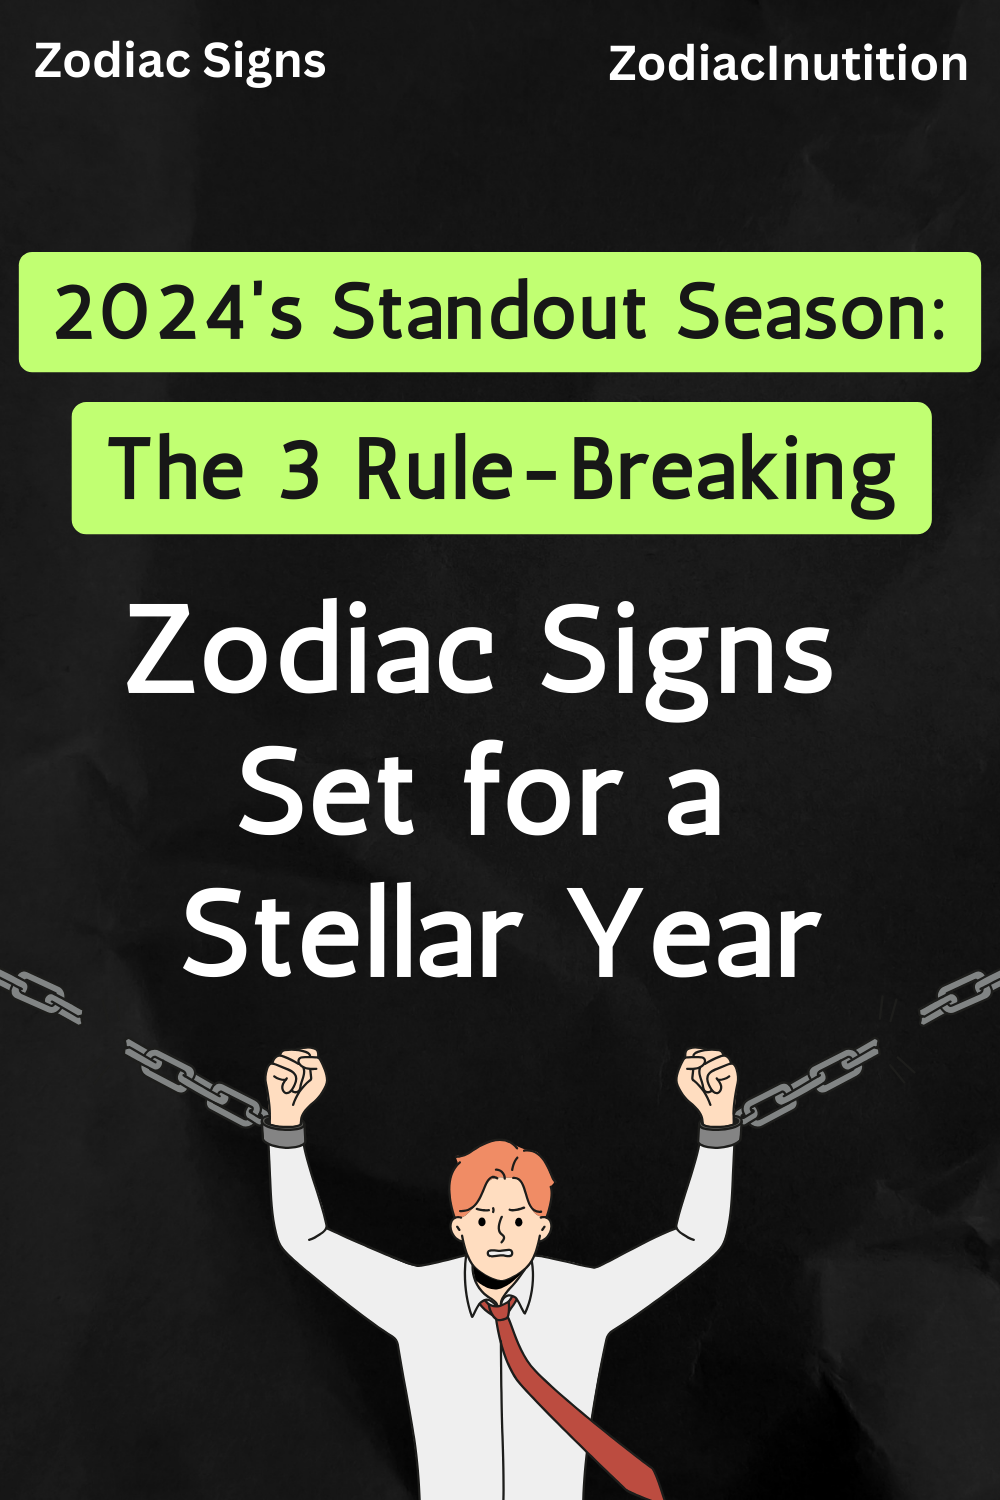 2024's Standout Season: The 3 Rule-Breaking Zodiac Signs Set for a Stellar Year